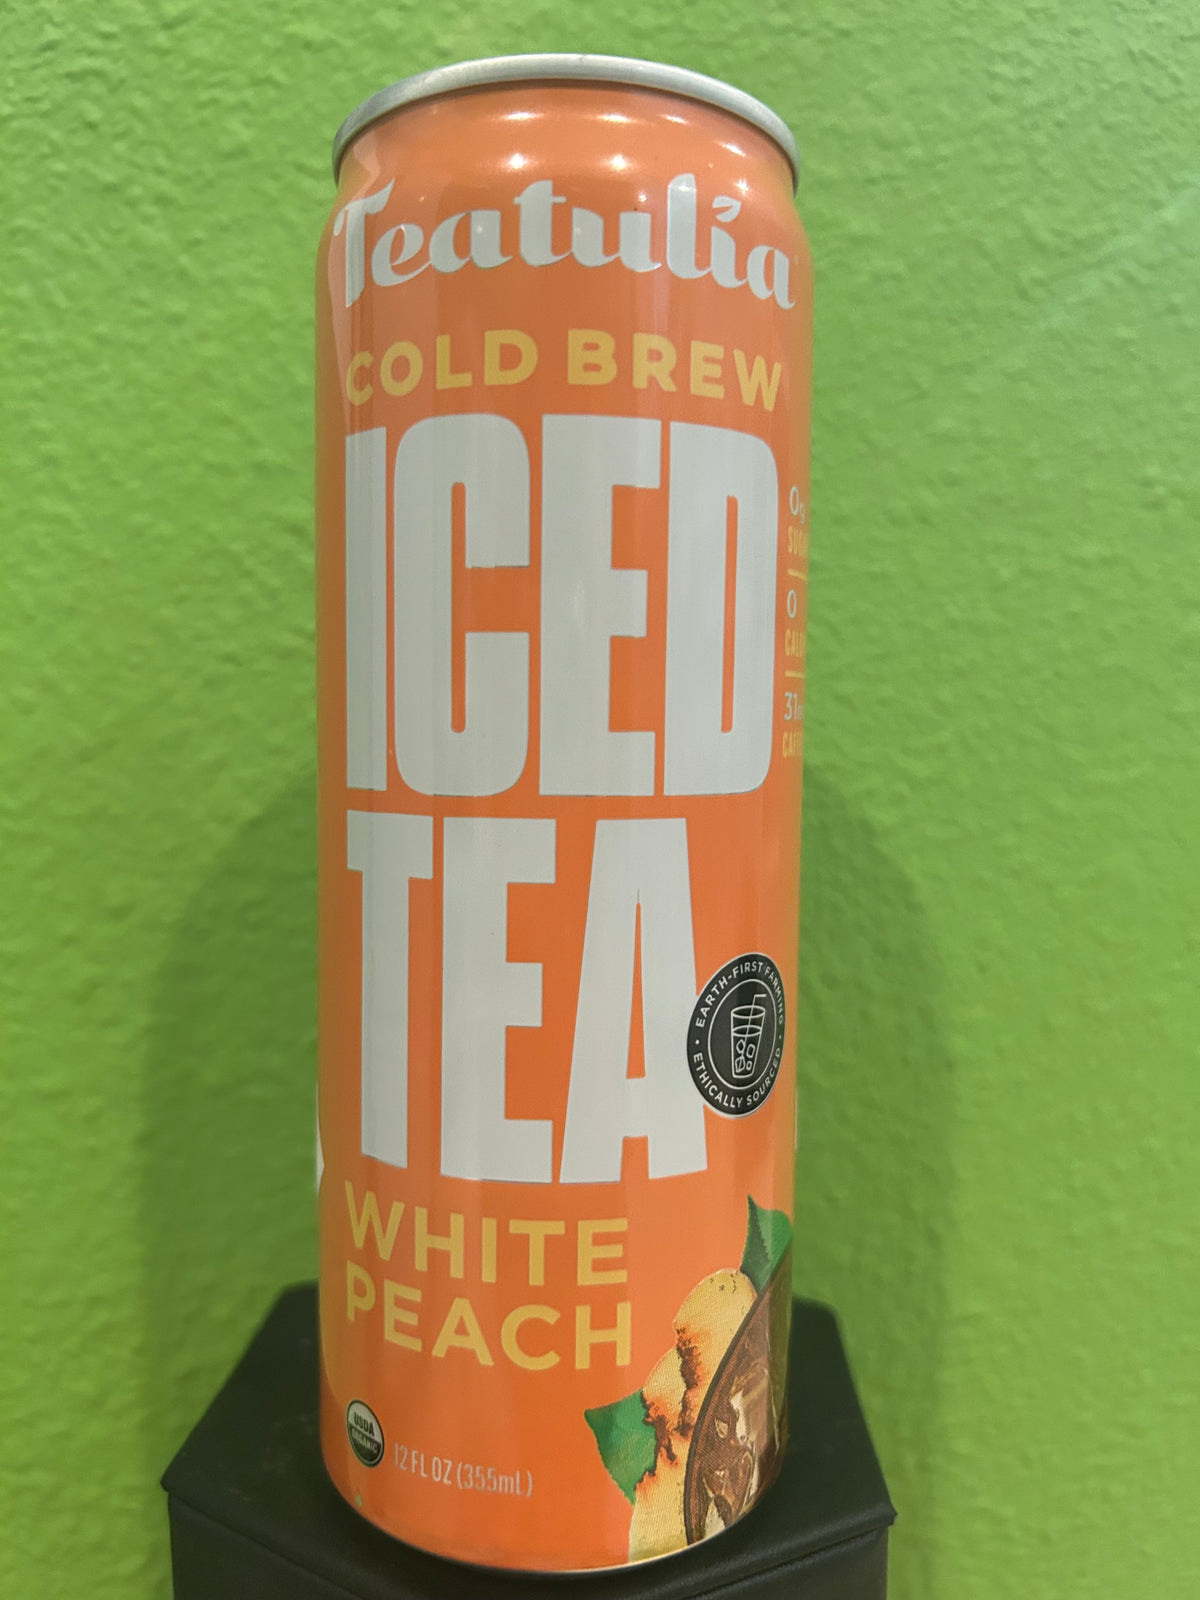 Teatulia Organic Teas-White Peach Iced Tea